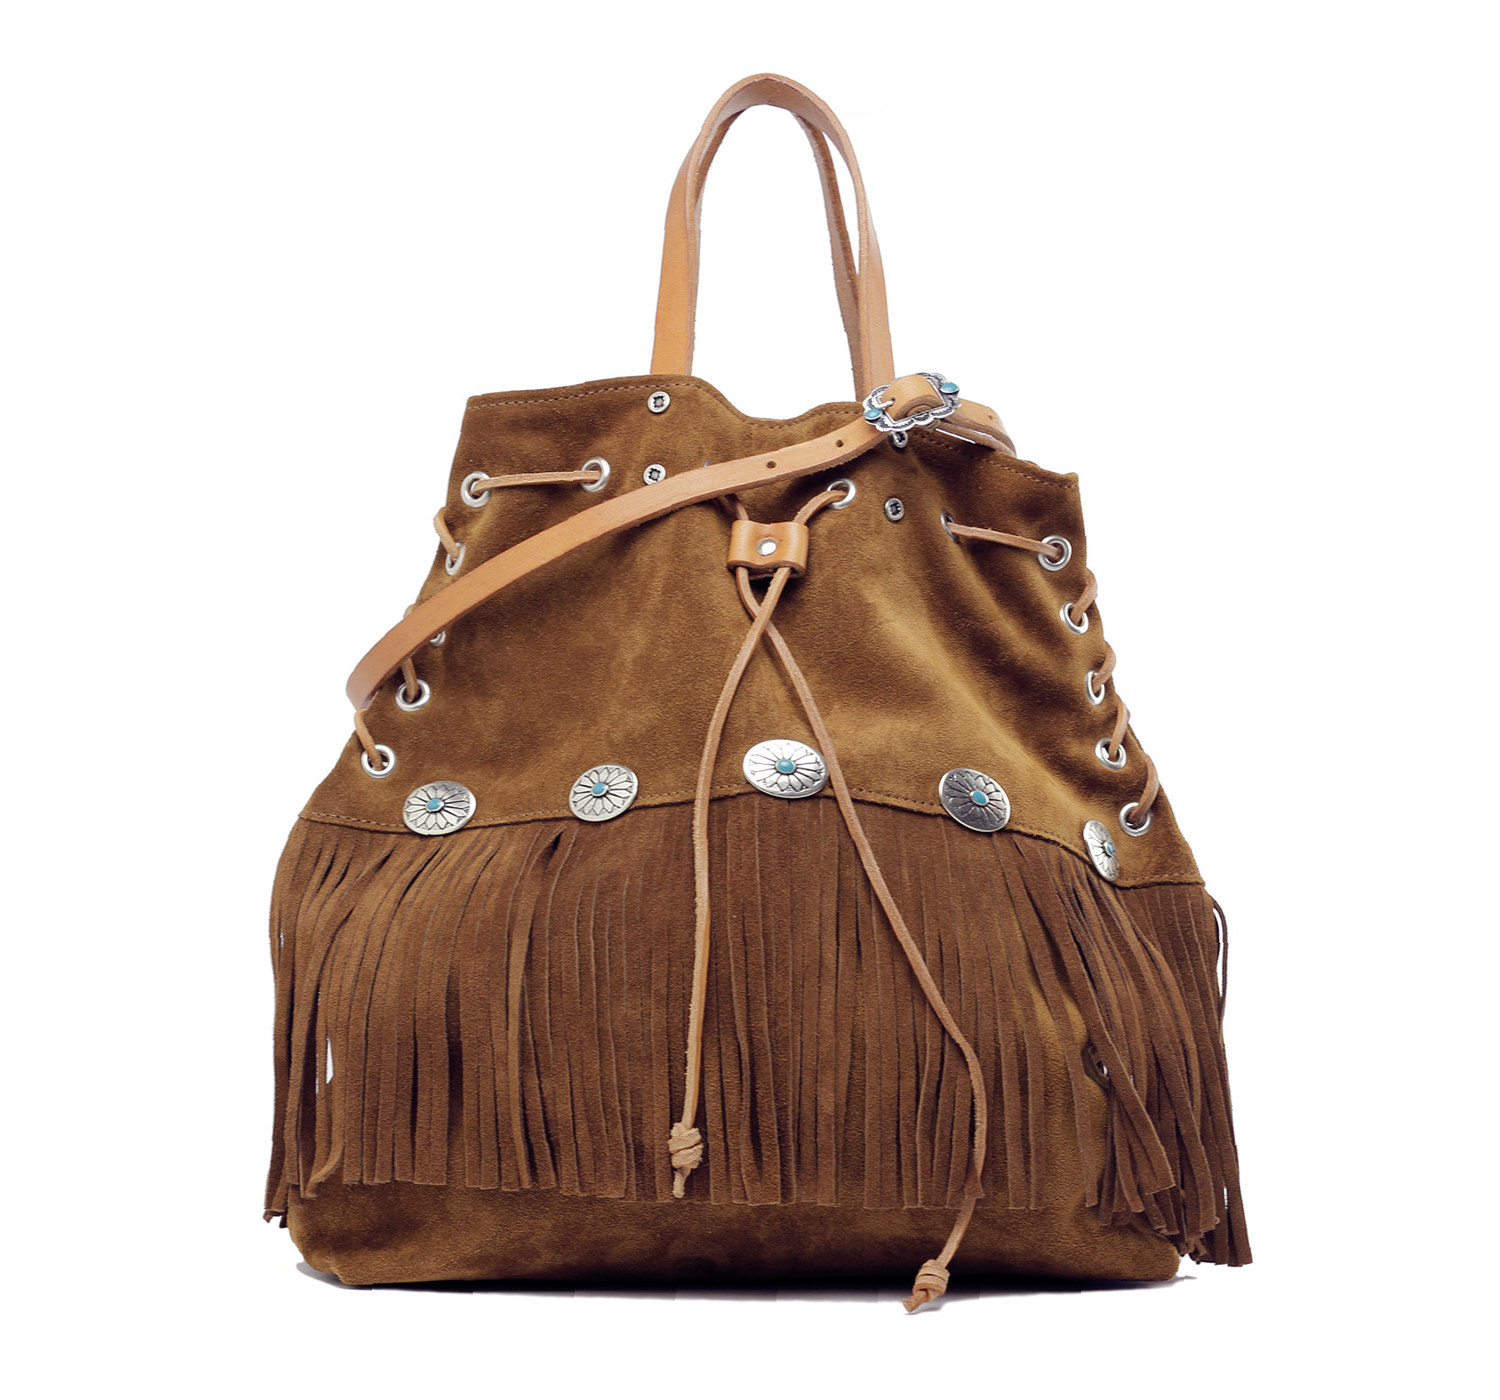 Coachella bag with fringes - Rust Mood